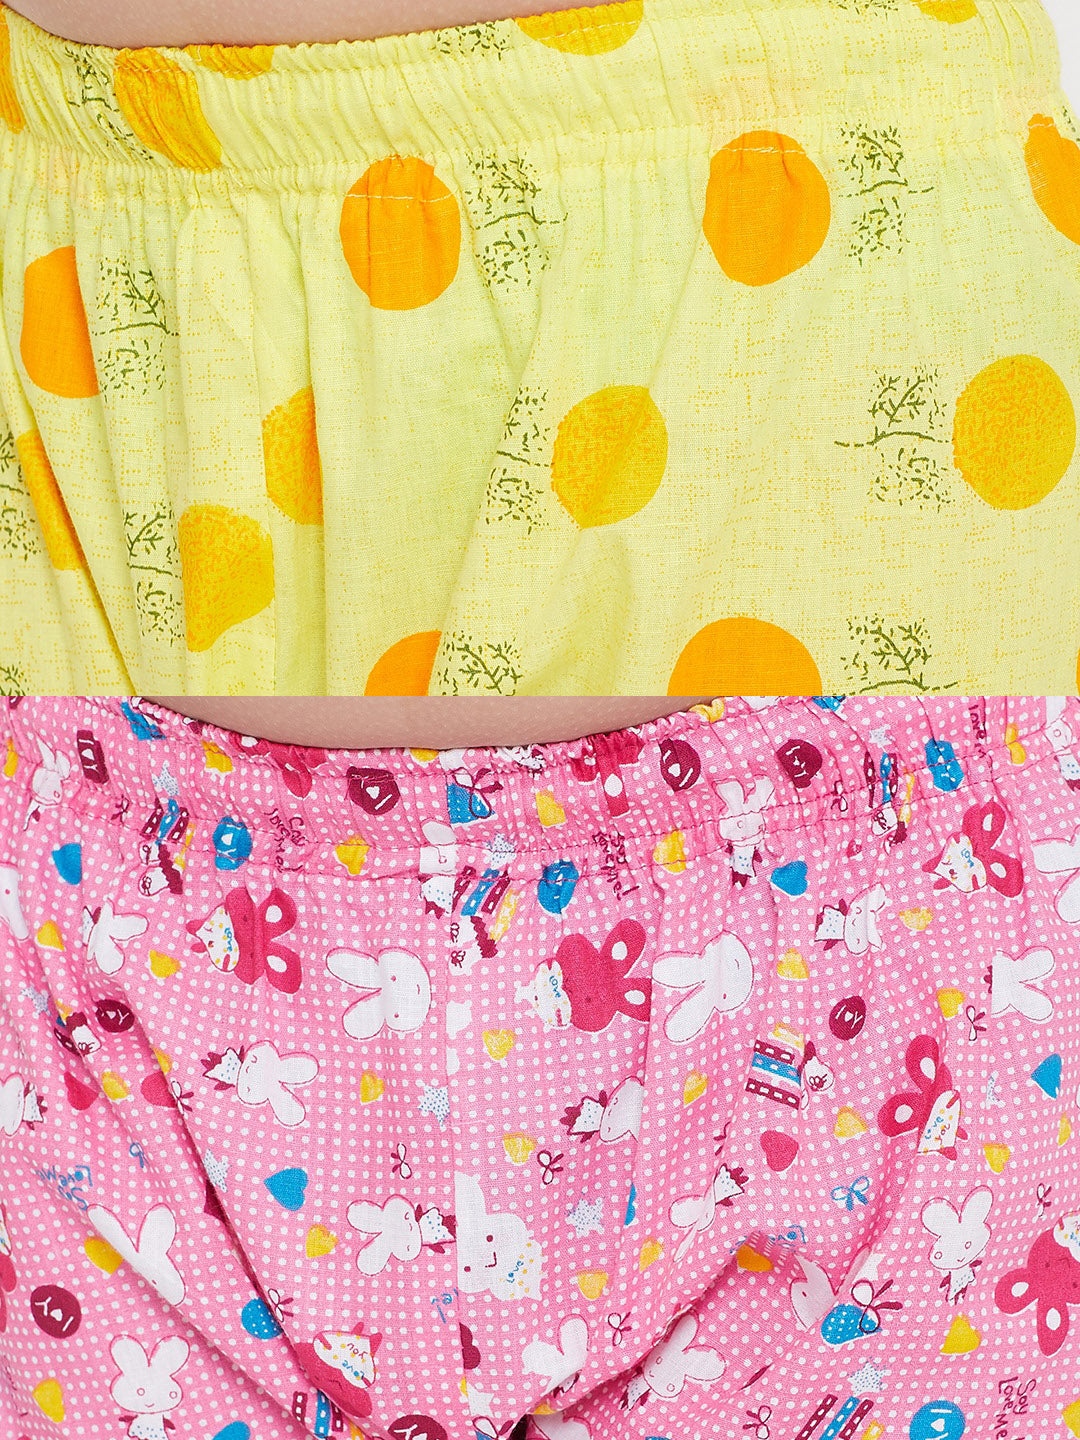 Girl's Yellow & Pink Printed Rayon Nightsuit (Pack of 2) - NOZ2TOZ KIDS